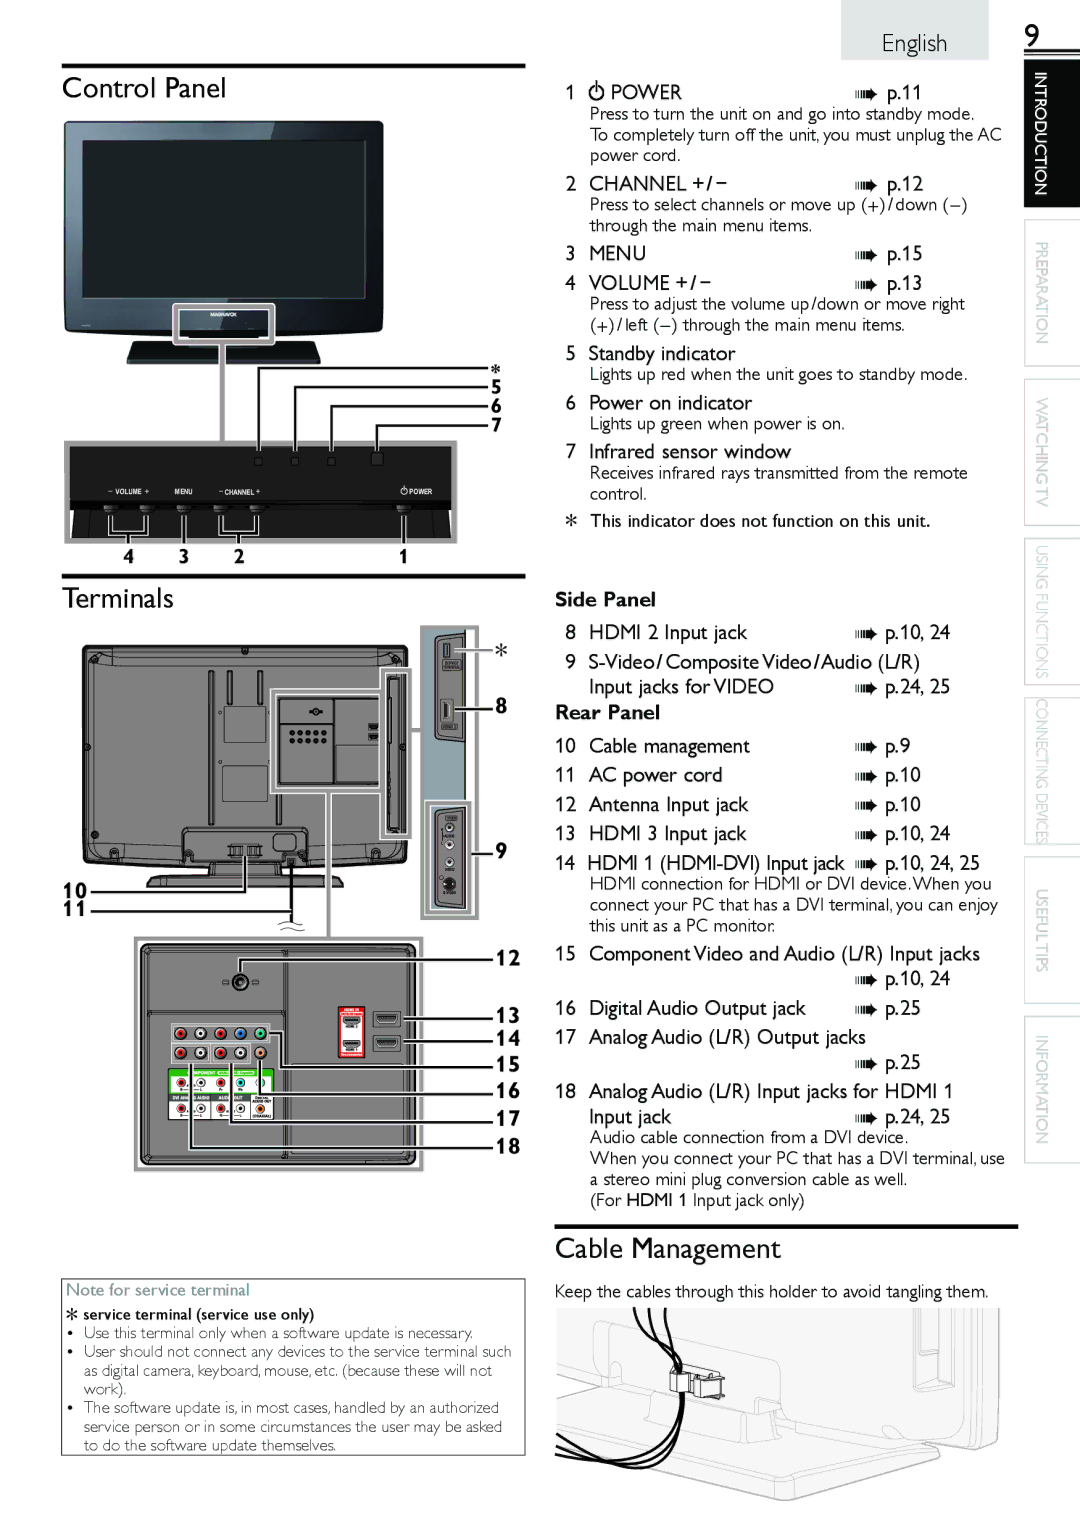 Magnavox 26MF301B owner manual Control Panel, Terminals, Cable Management 